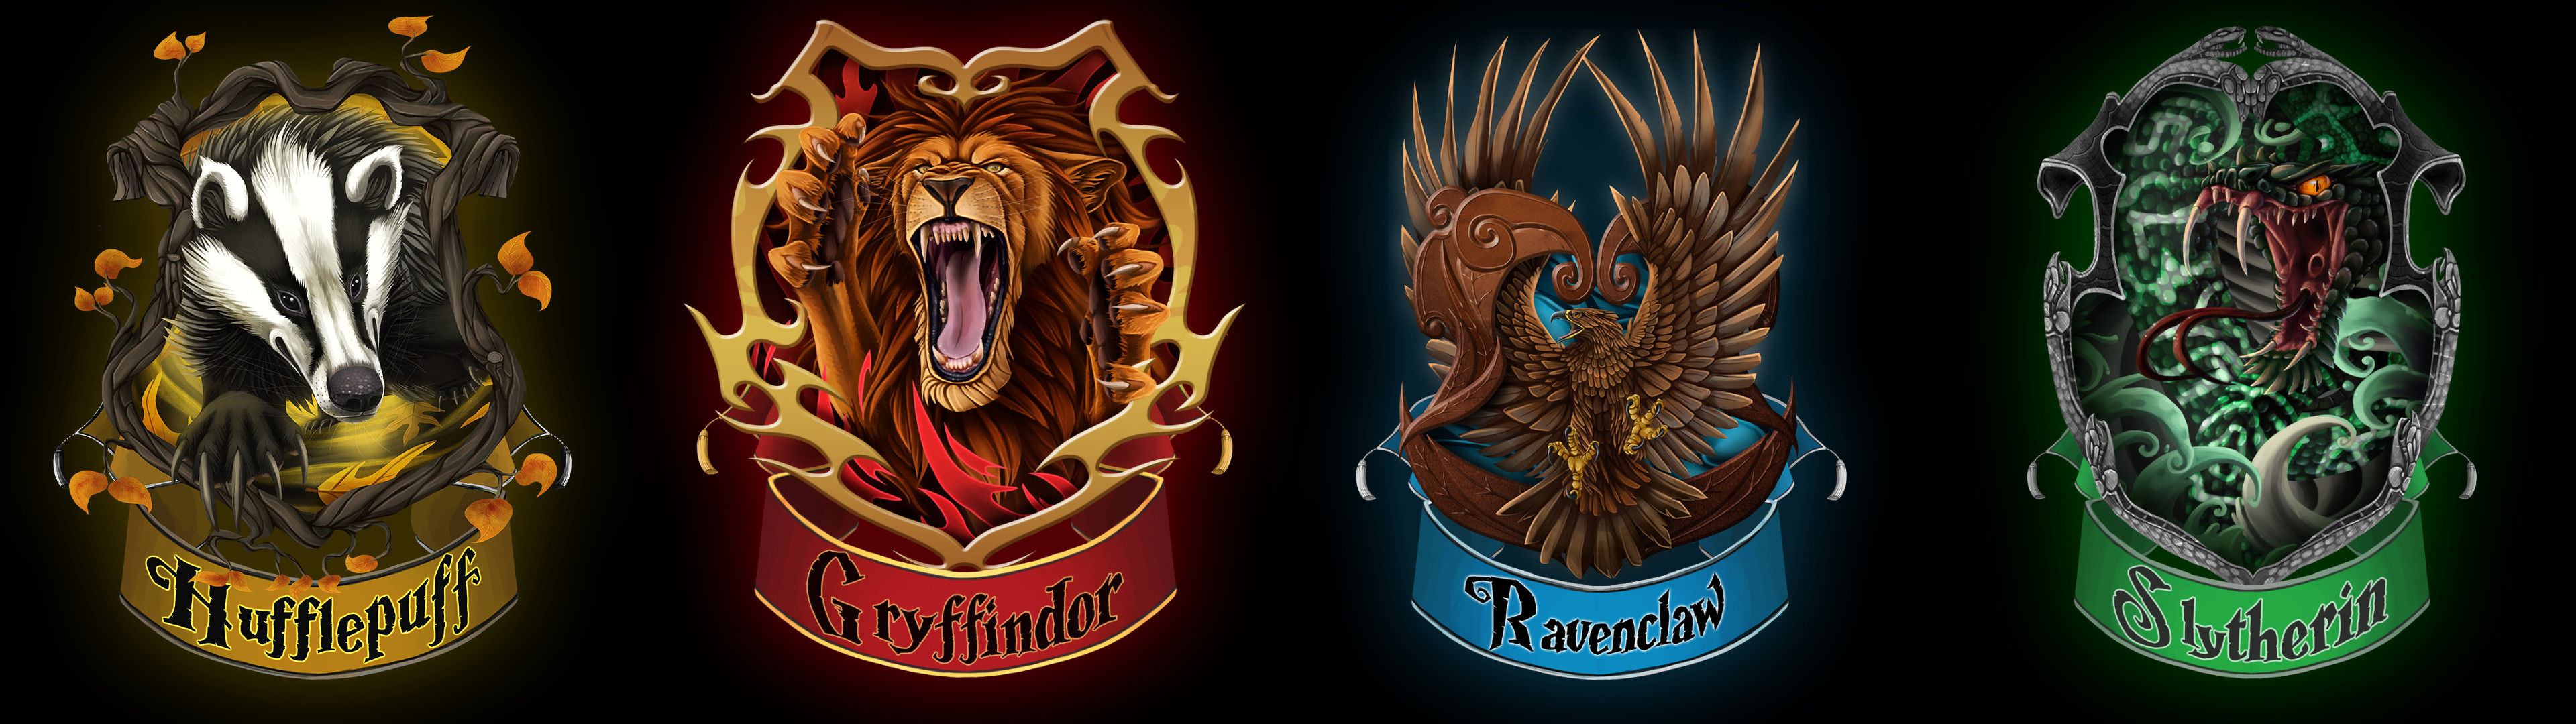 Ravenclaw Wallpaper Hd - Harry Potter Wallpaper Houses , HD Wallpaper & Backgrounds